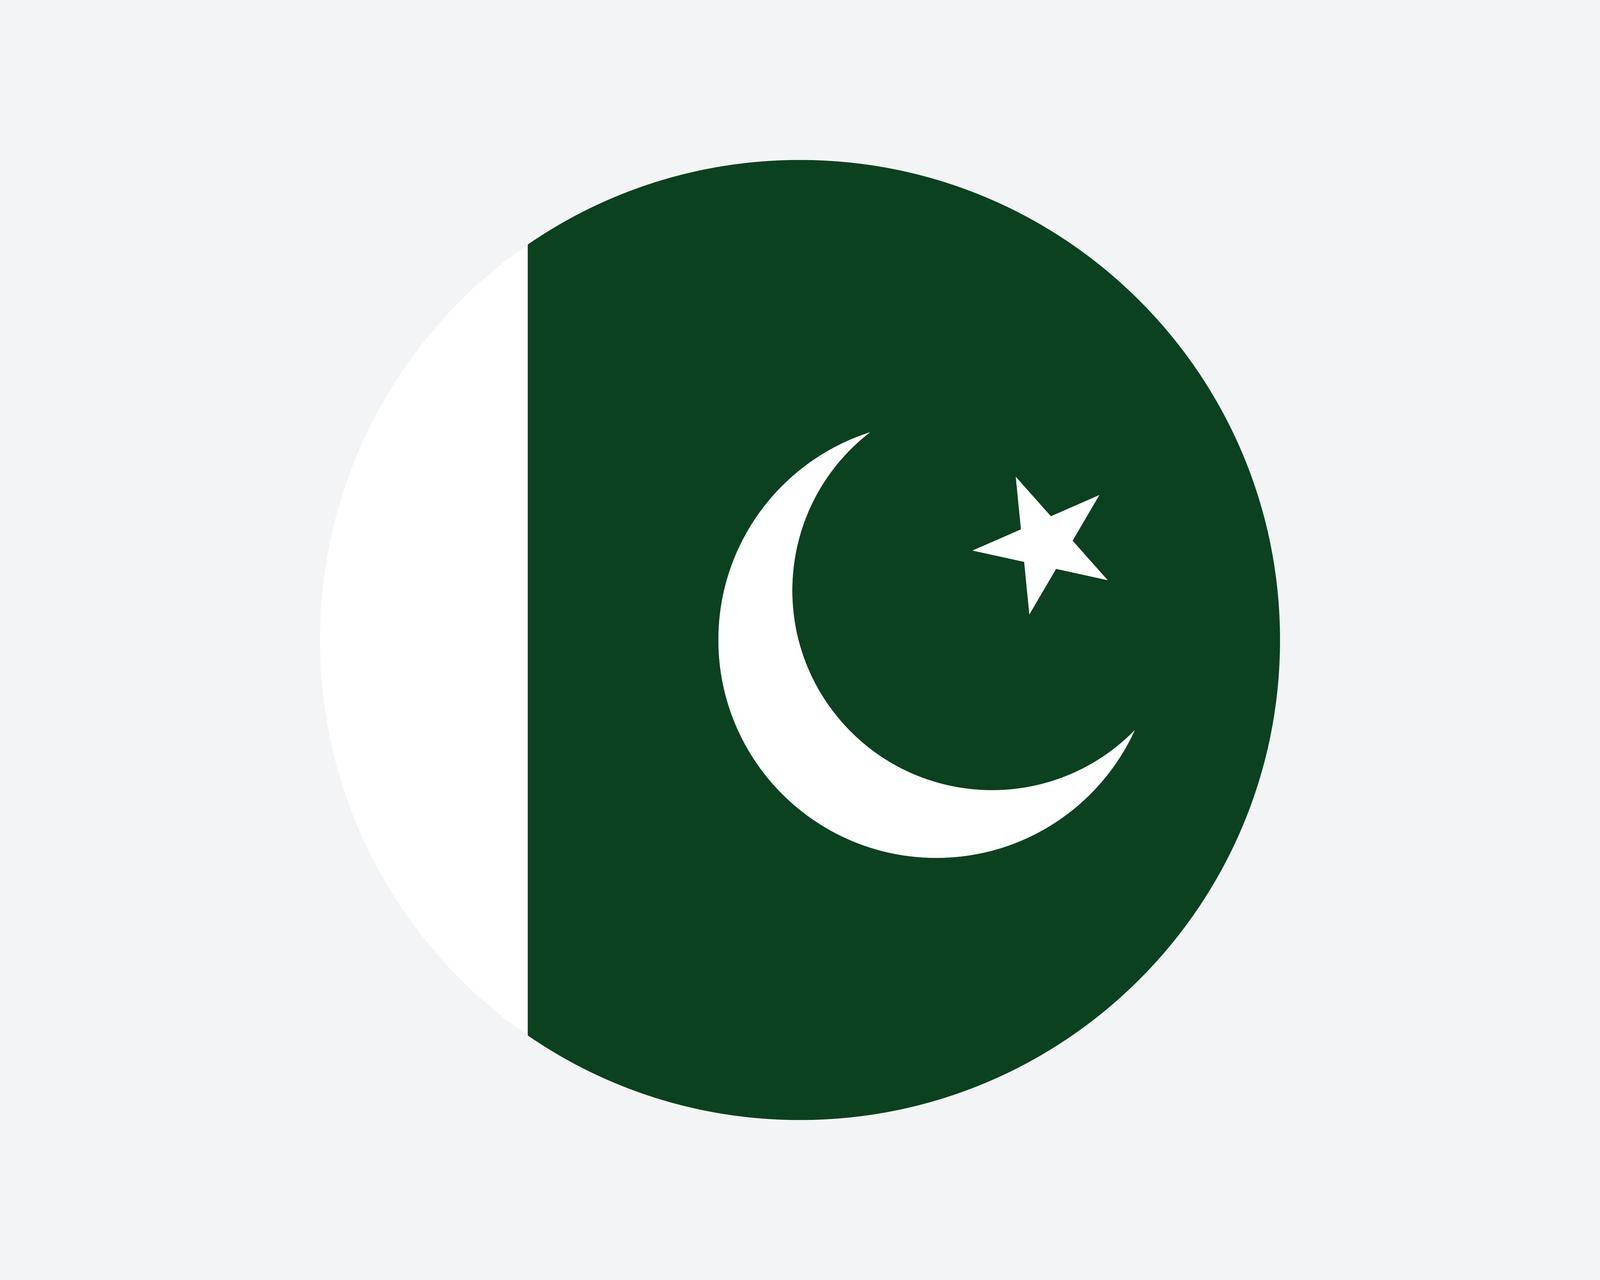 Pakistan Round Country Flag. Pakistani Circle National Flag. Islamic Republic of Pakistan Circular Shape Button Banner. EPS Vector Illustration.